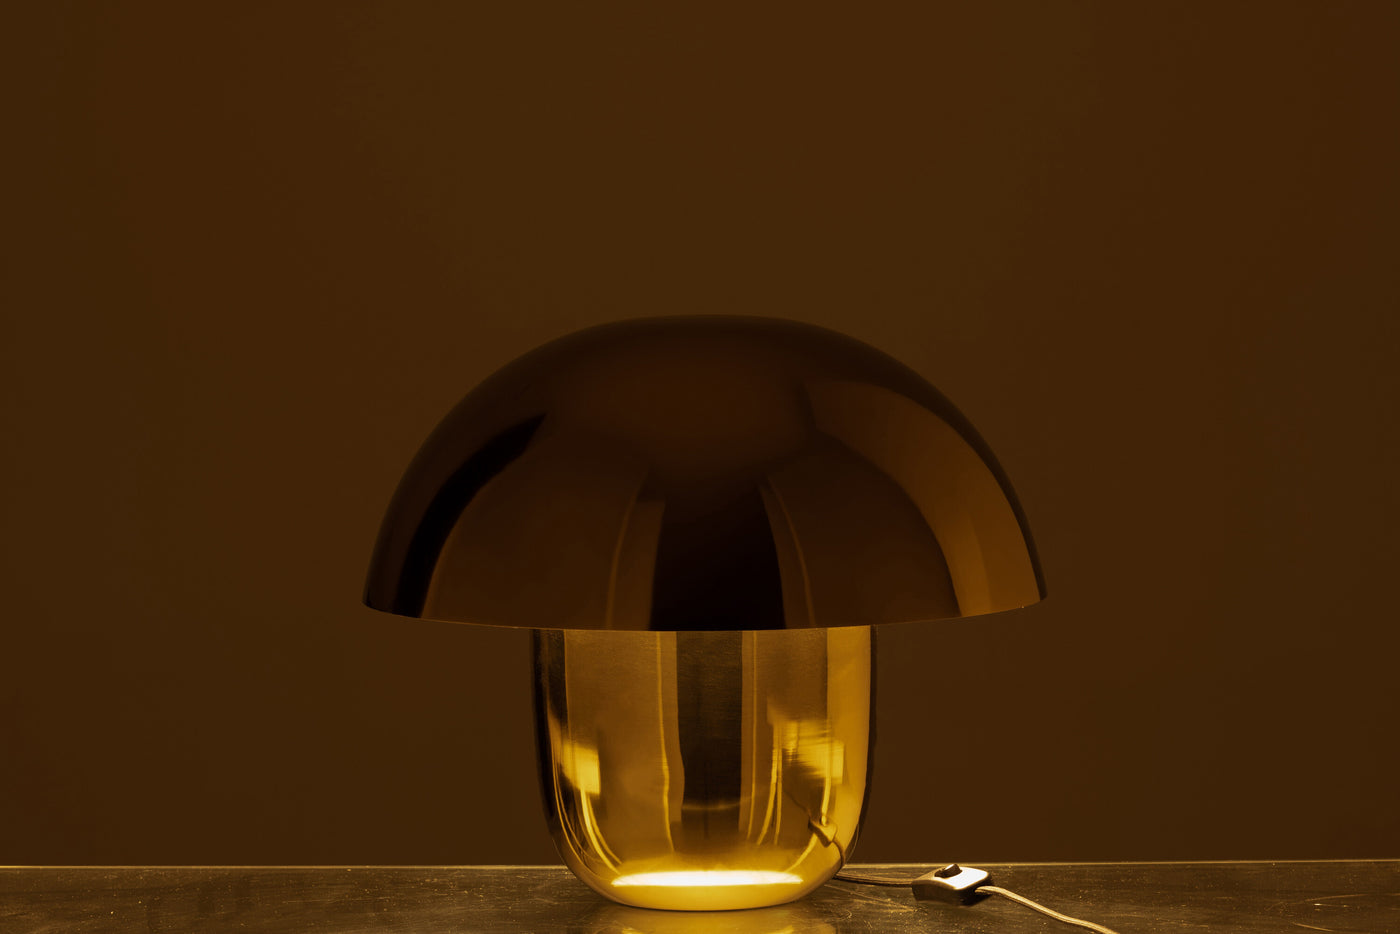 LAMP MUSHROOM IRON GOLD SMALL